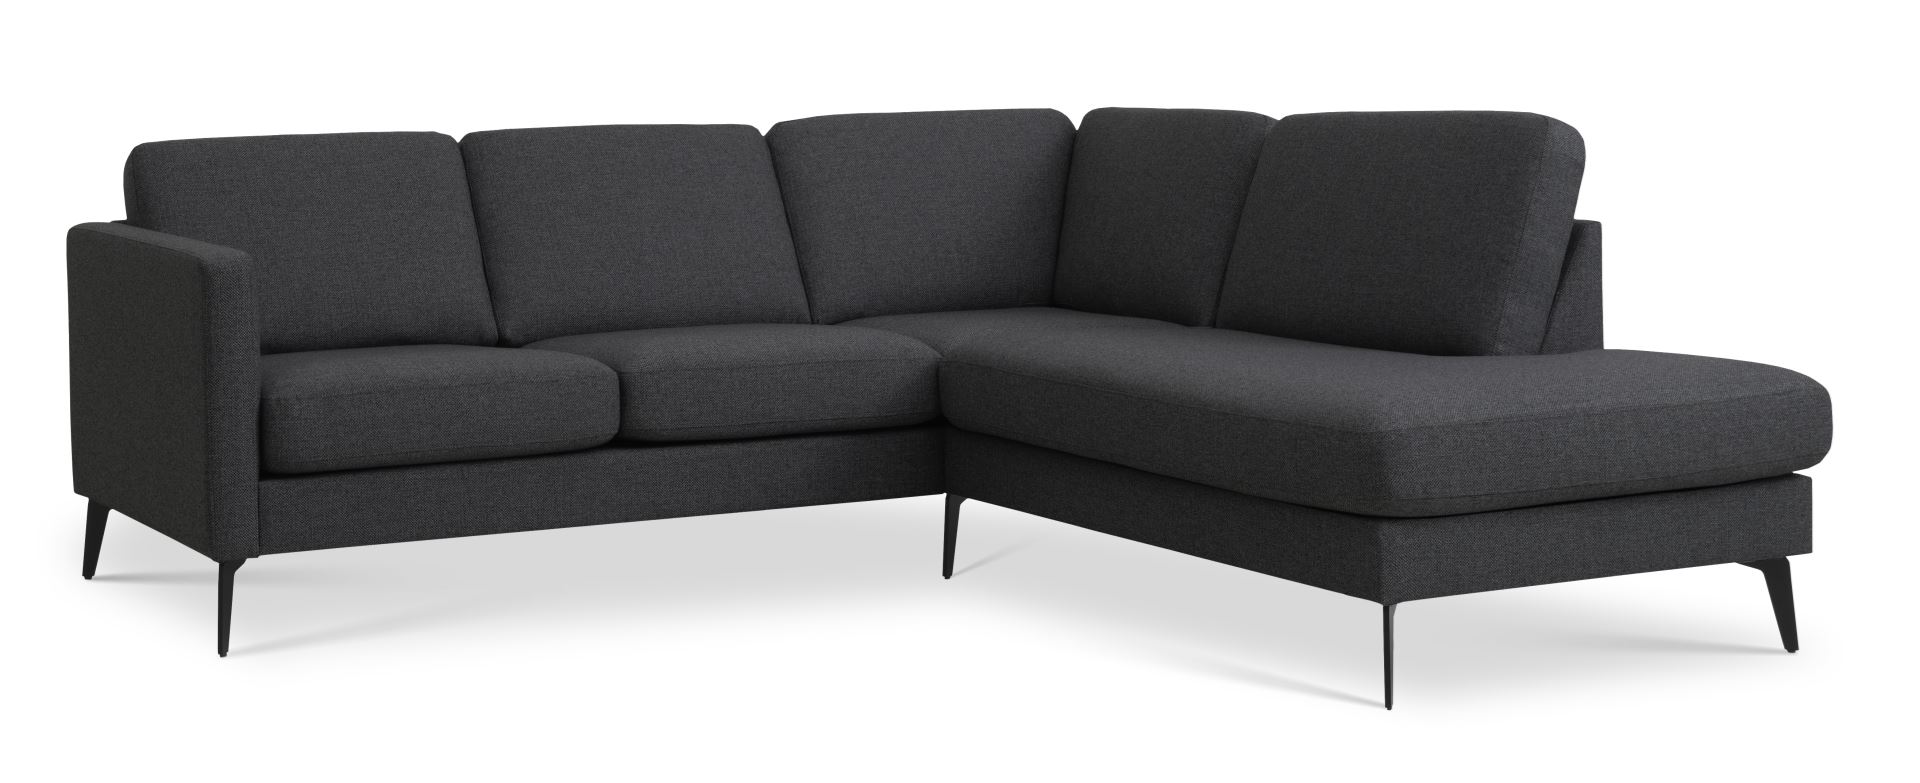 Ask sæt 53 lille OE sofa, m. højre chaiselong - antracitgrå polyester stof og Eiffel ben